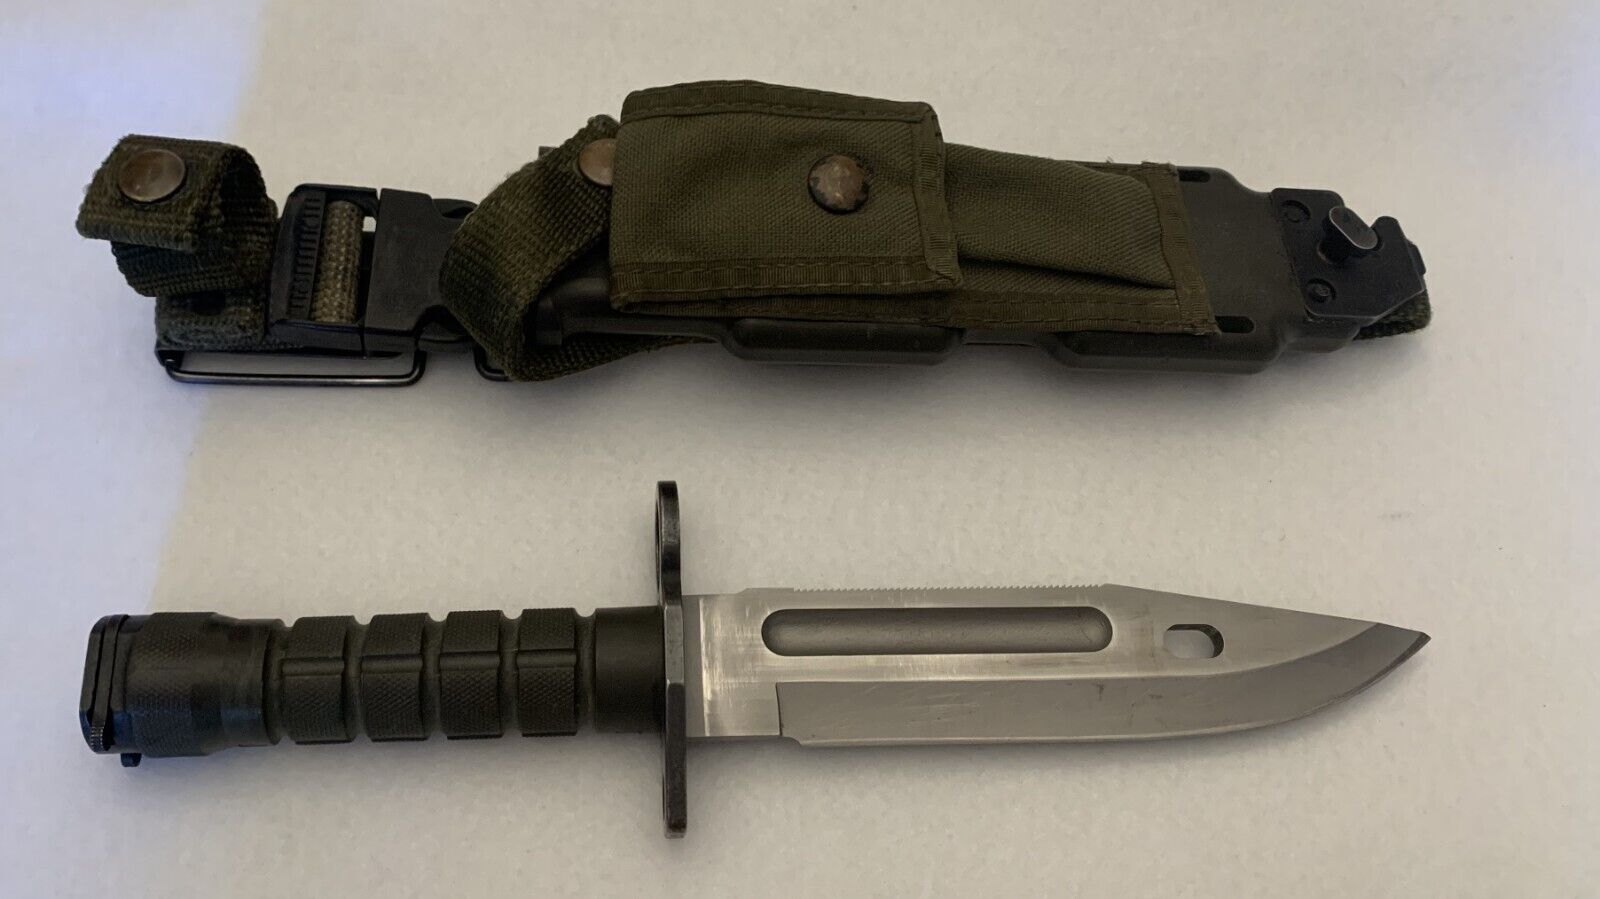 Original U.S. Military M9 Phrobis III Fixed Blade Combat Knife with Scabbard